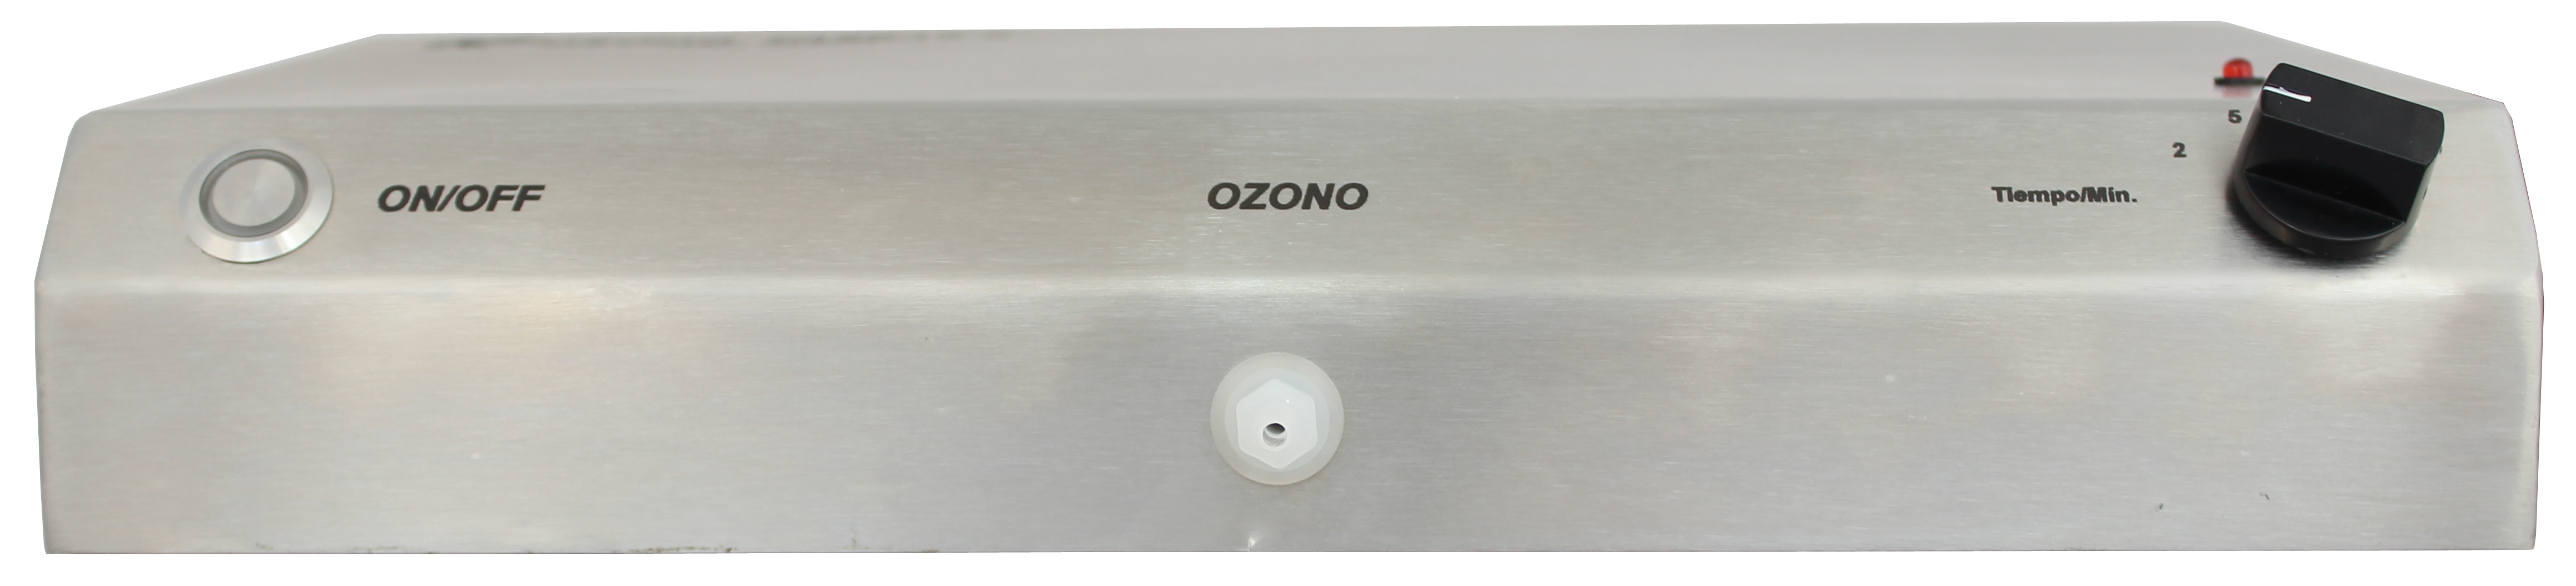 WH-2H 200 mg/hr Equipo de ozono para purificación de agua uso doméstico